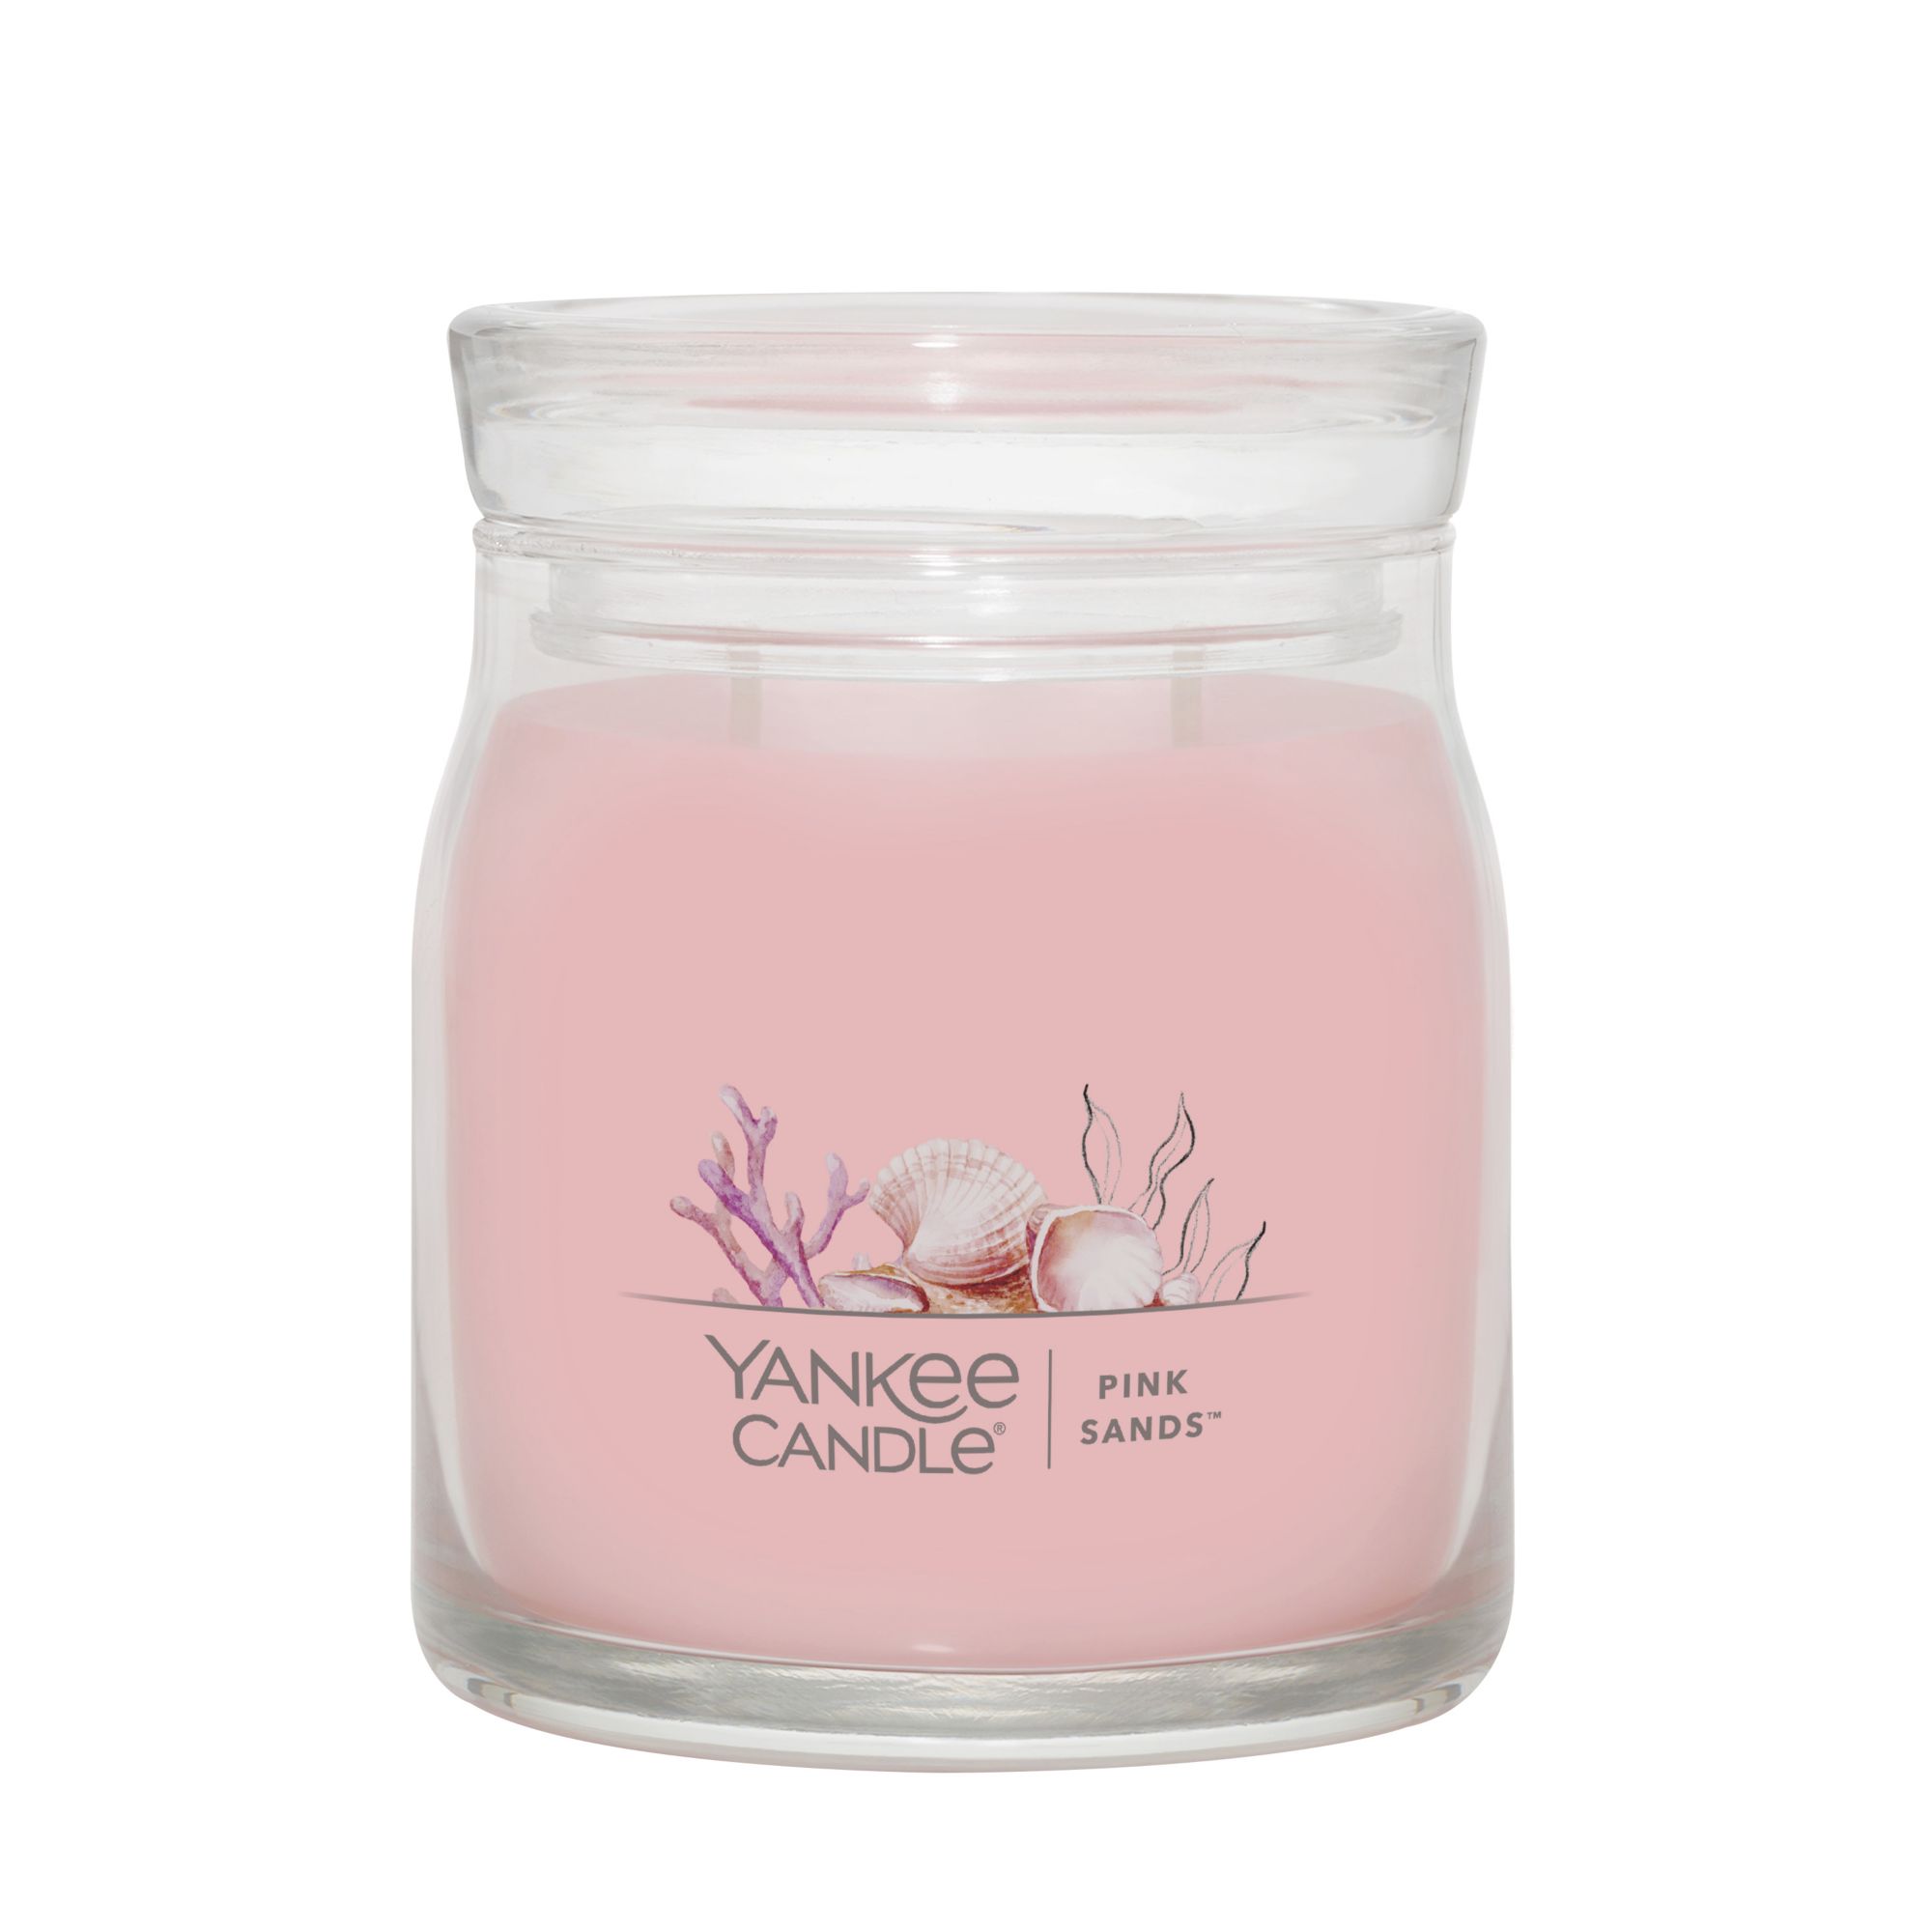 Yankee Candle Signature Medium Jar Candle - Pink Sands